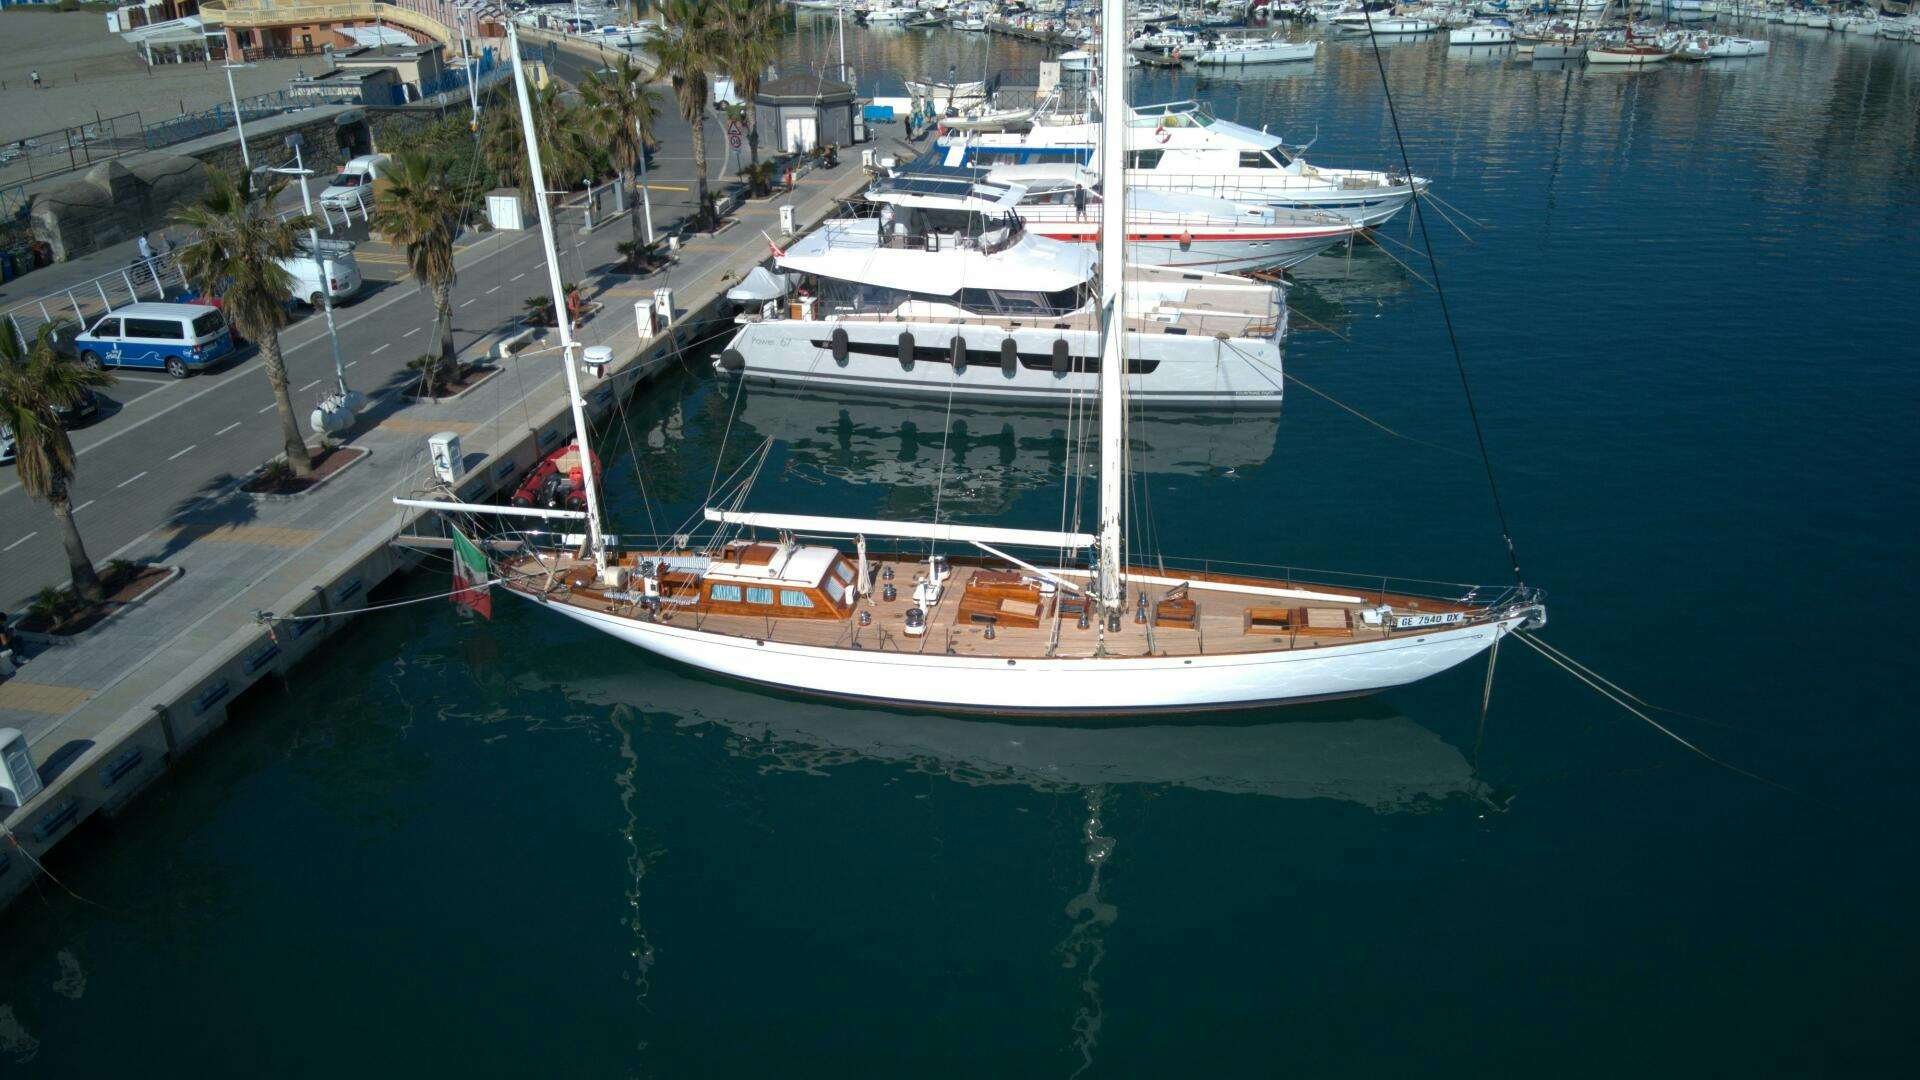 Windigo
Yacht for Sale